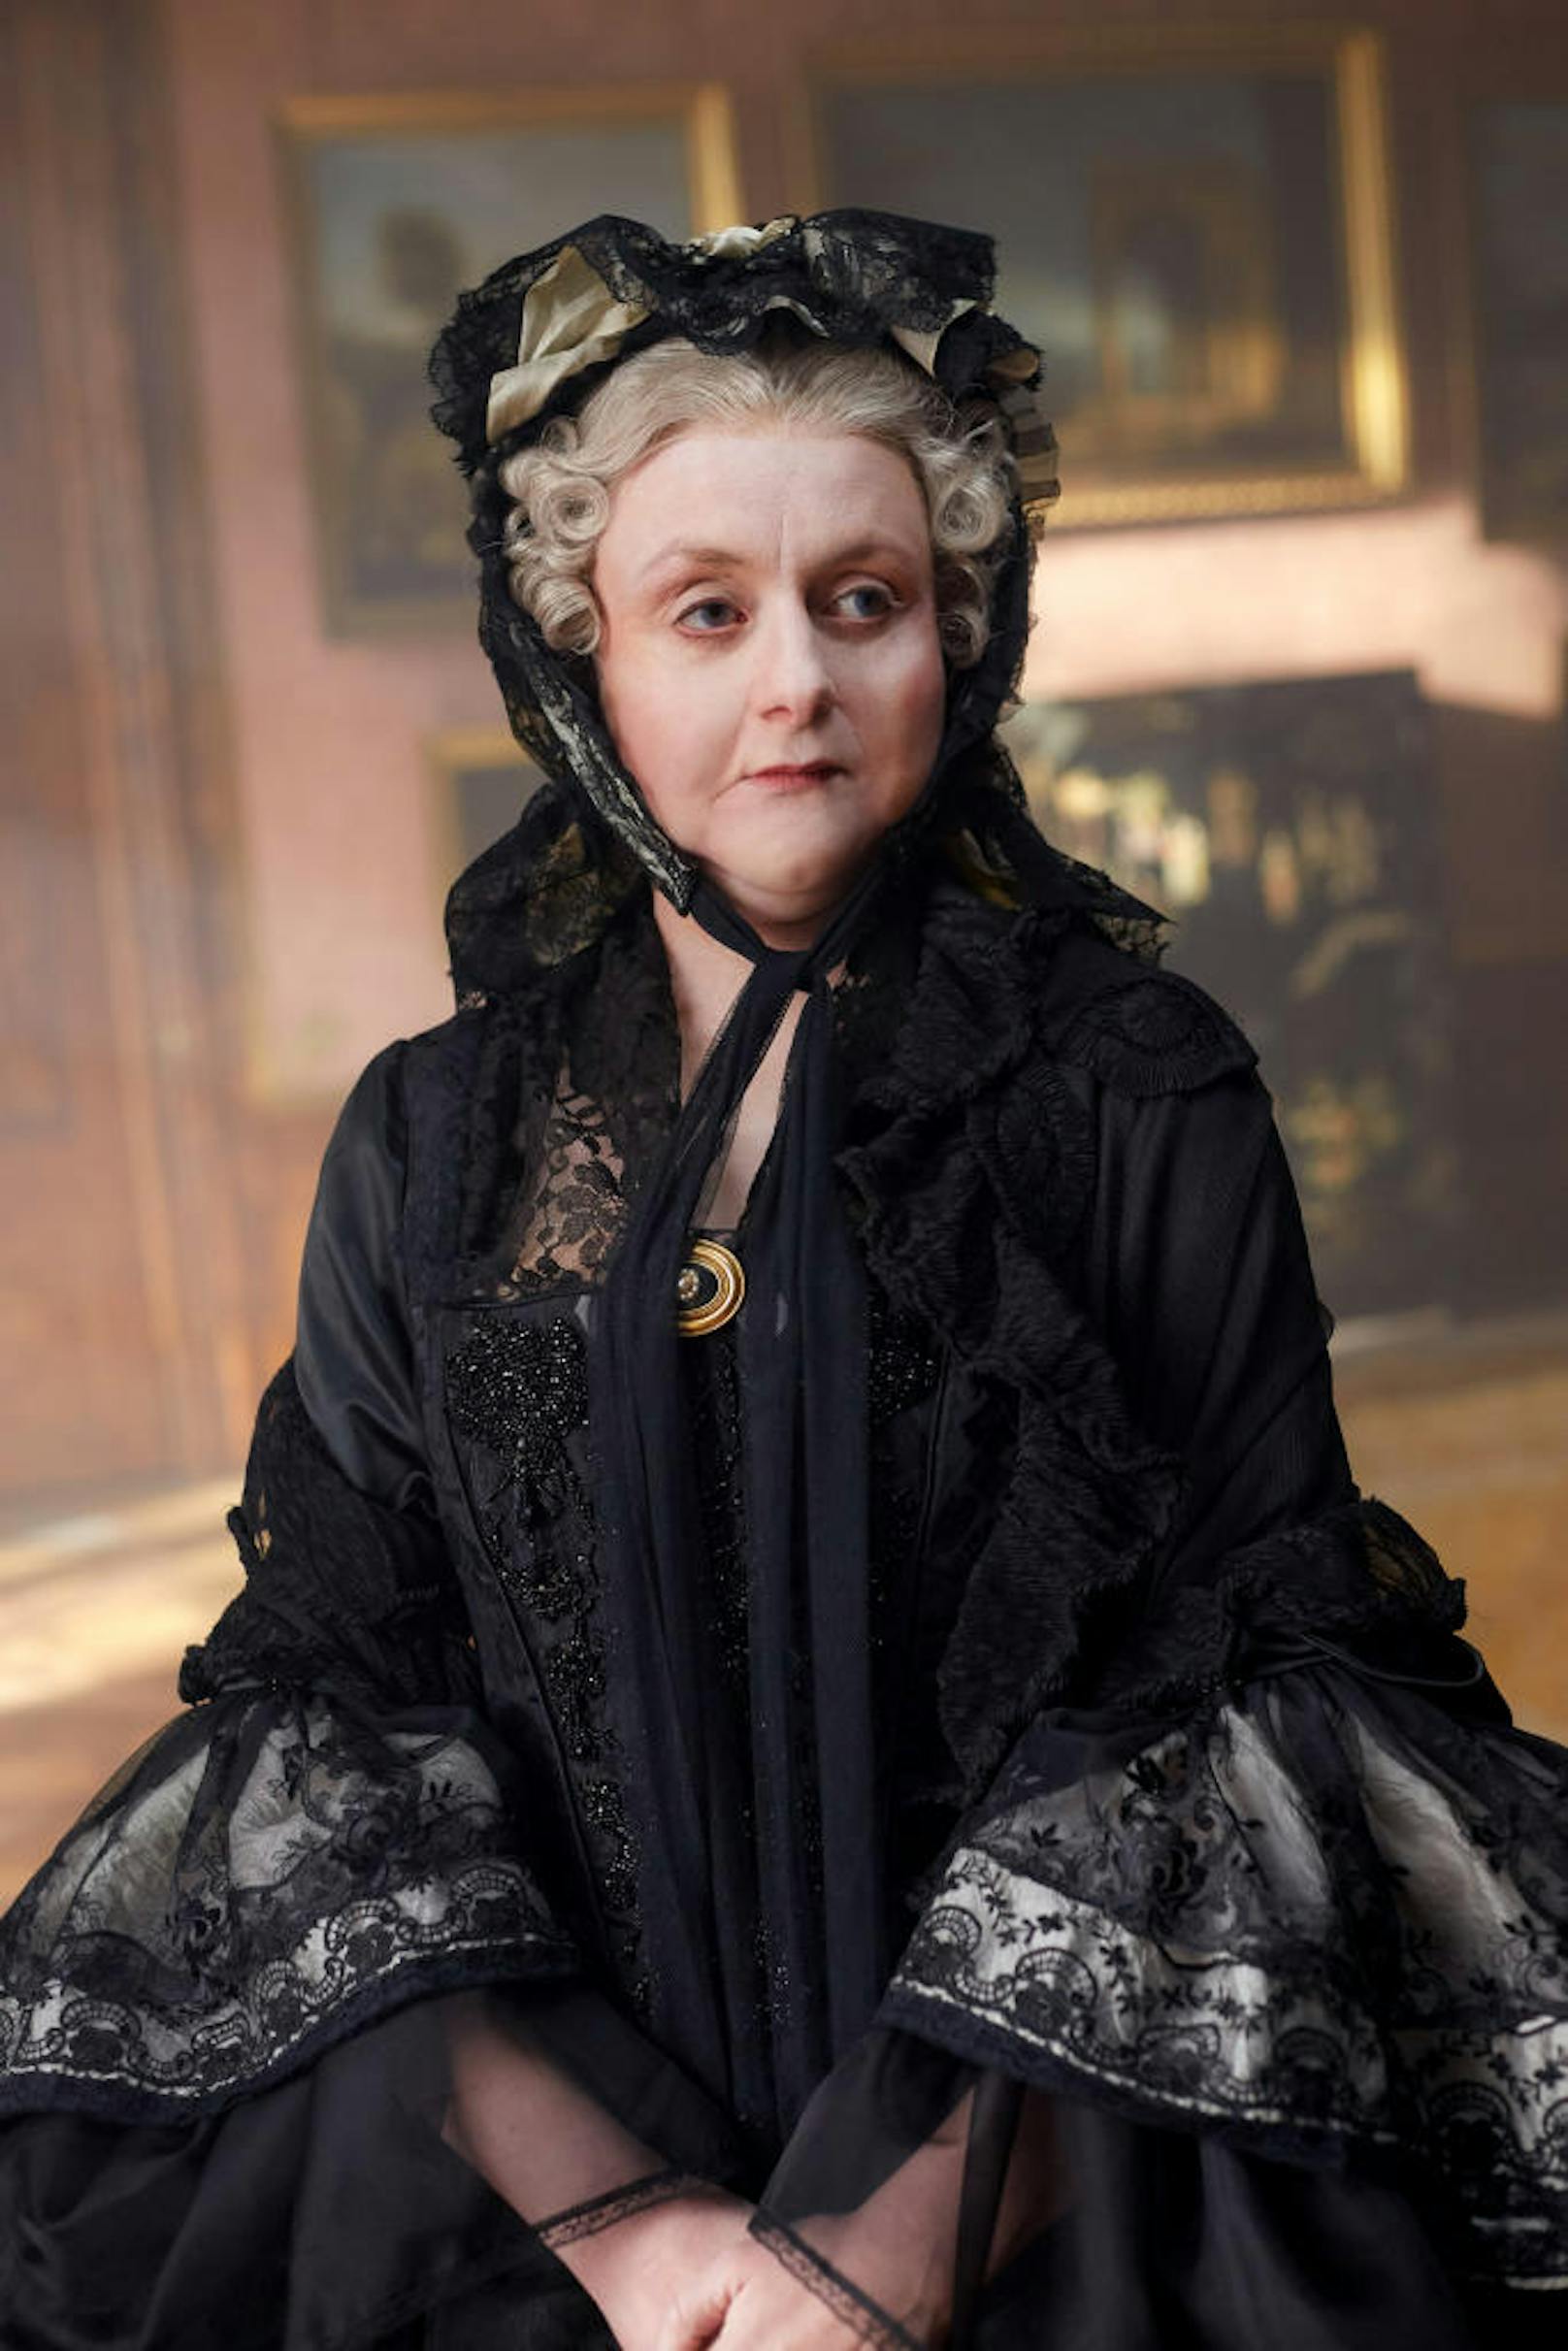 Gerti Drassl als Kaiserin Maria Theresia in der ORF History Dokumentation "Maria Theresia - Majestät und Mutter"